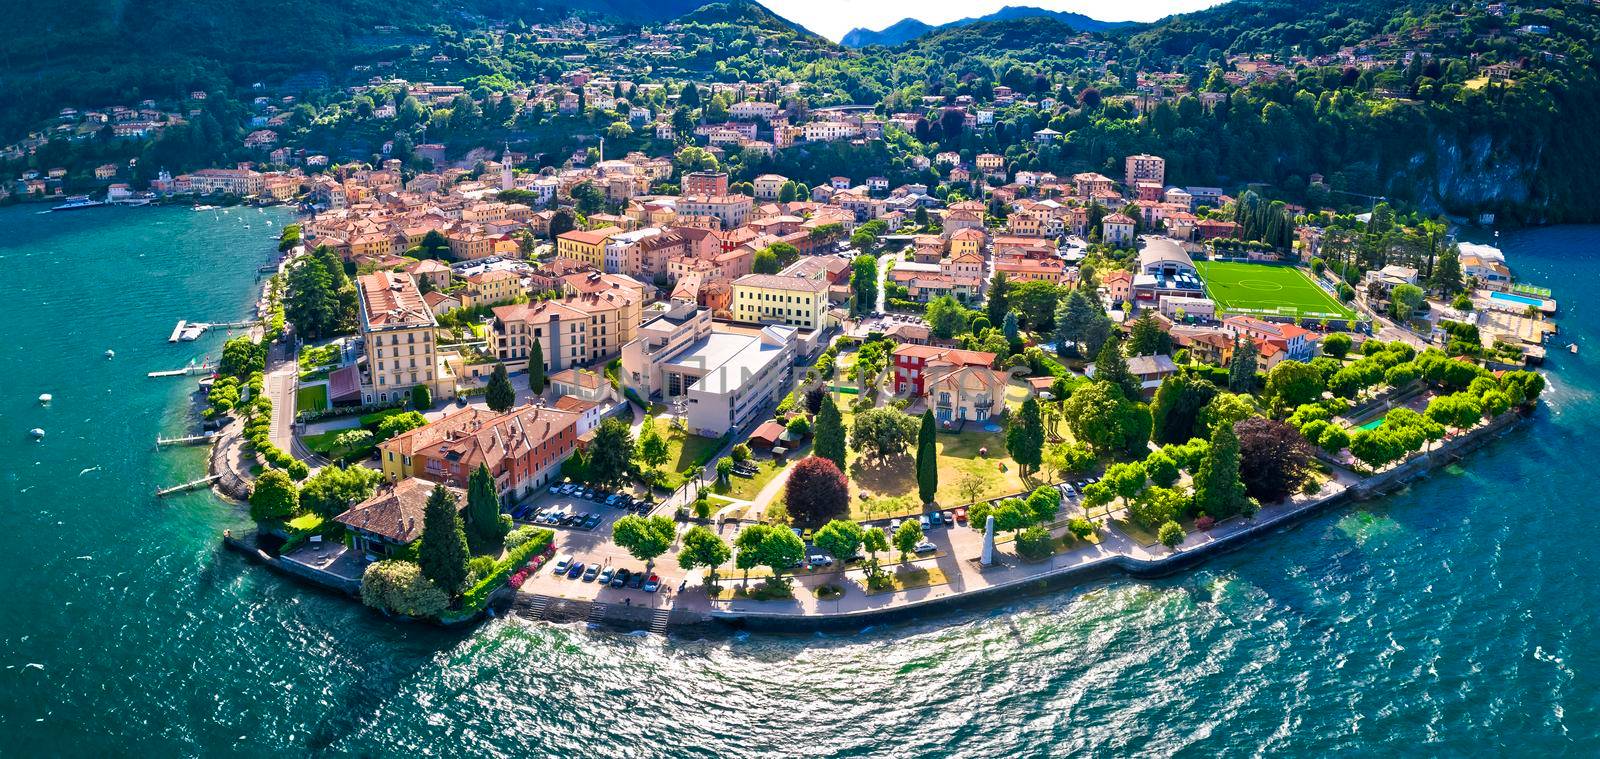 Menaggio, Como Lake. Panoramic aerial view of town of Menaggio on Como Lake by xbrchx